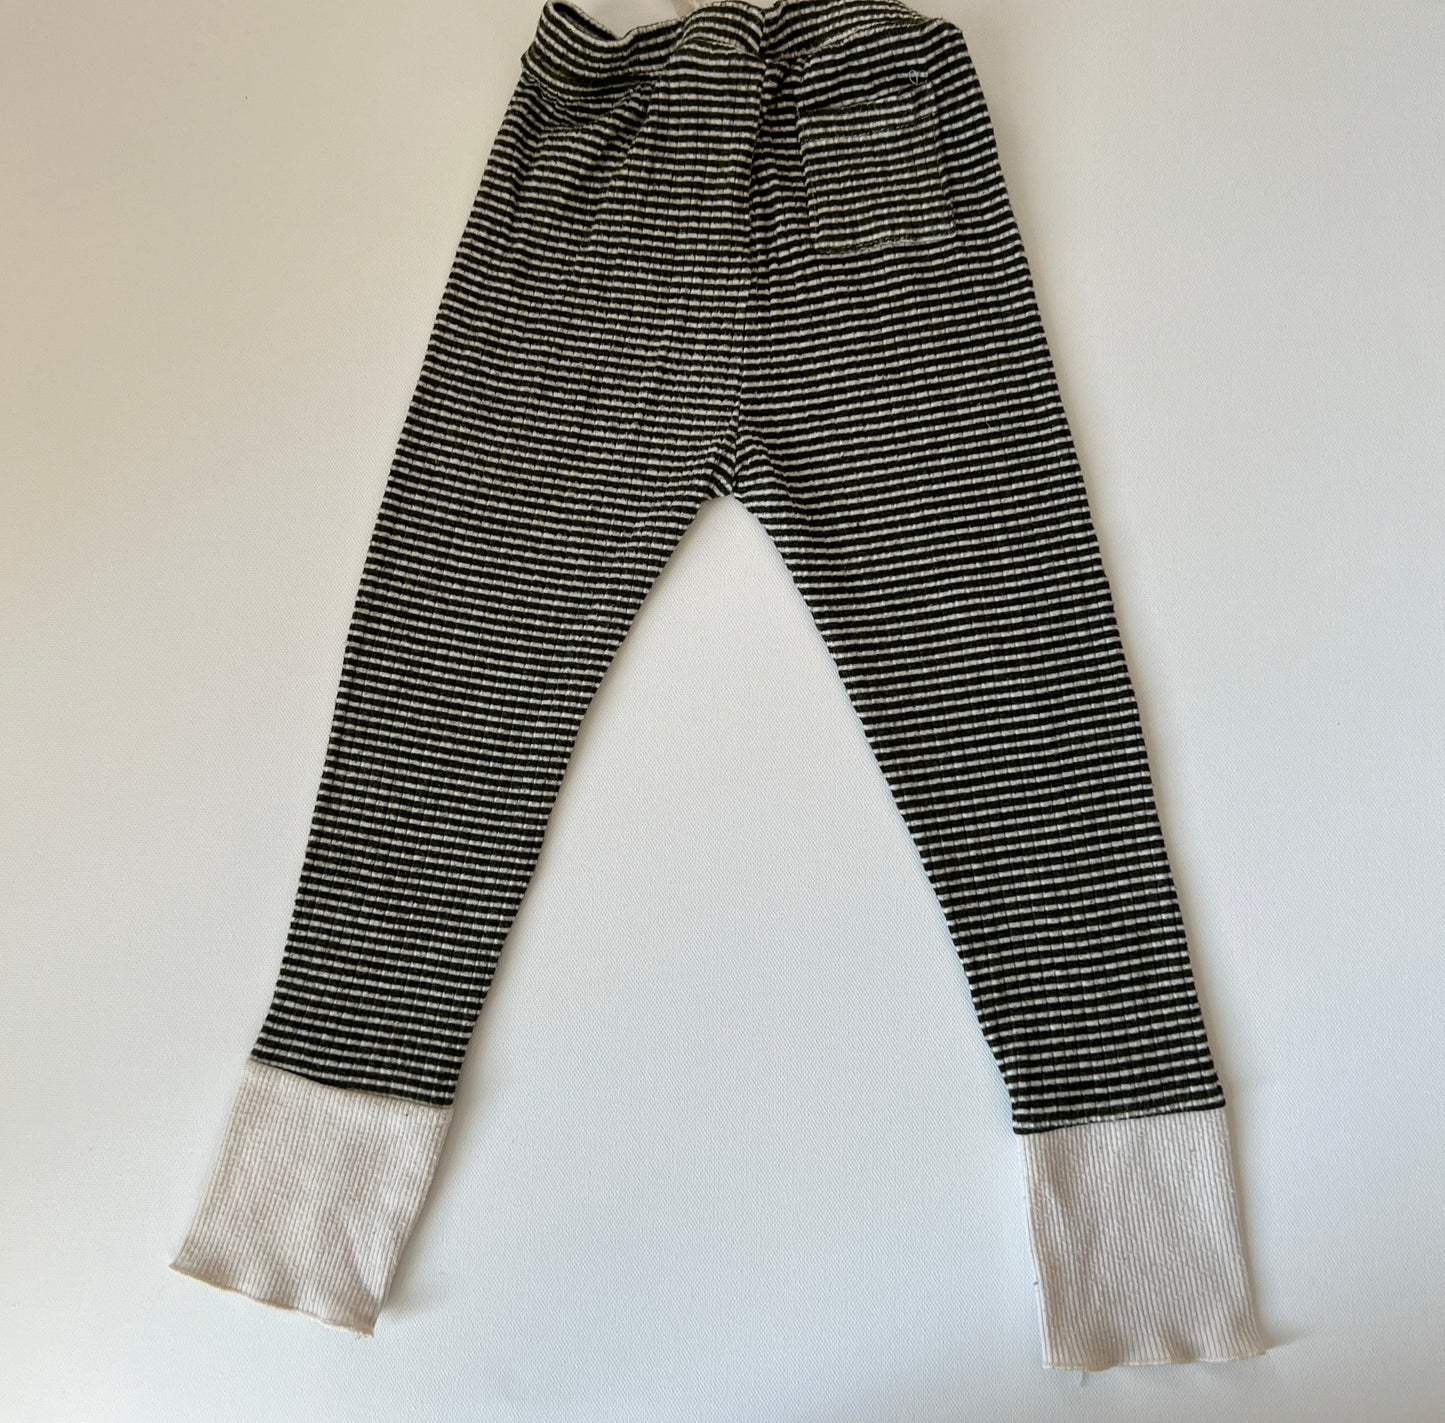 Zara Knit Pants for Girls - Grey Striped